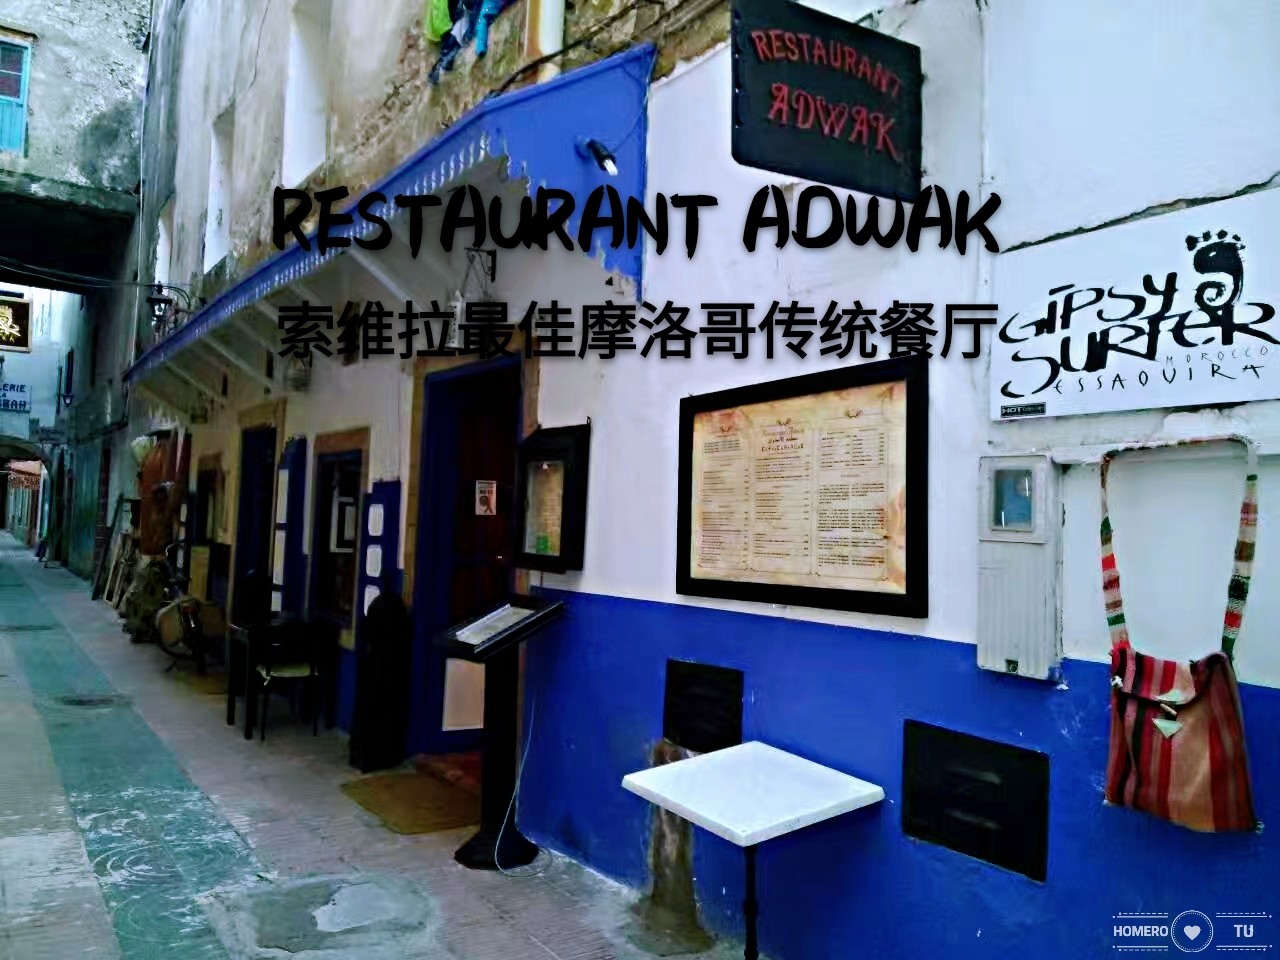 Adwak 索维拉最佳摩洛哥餐厅